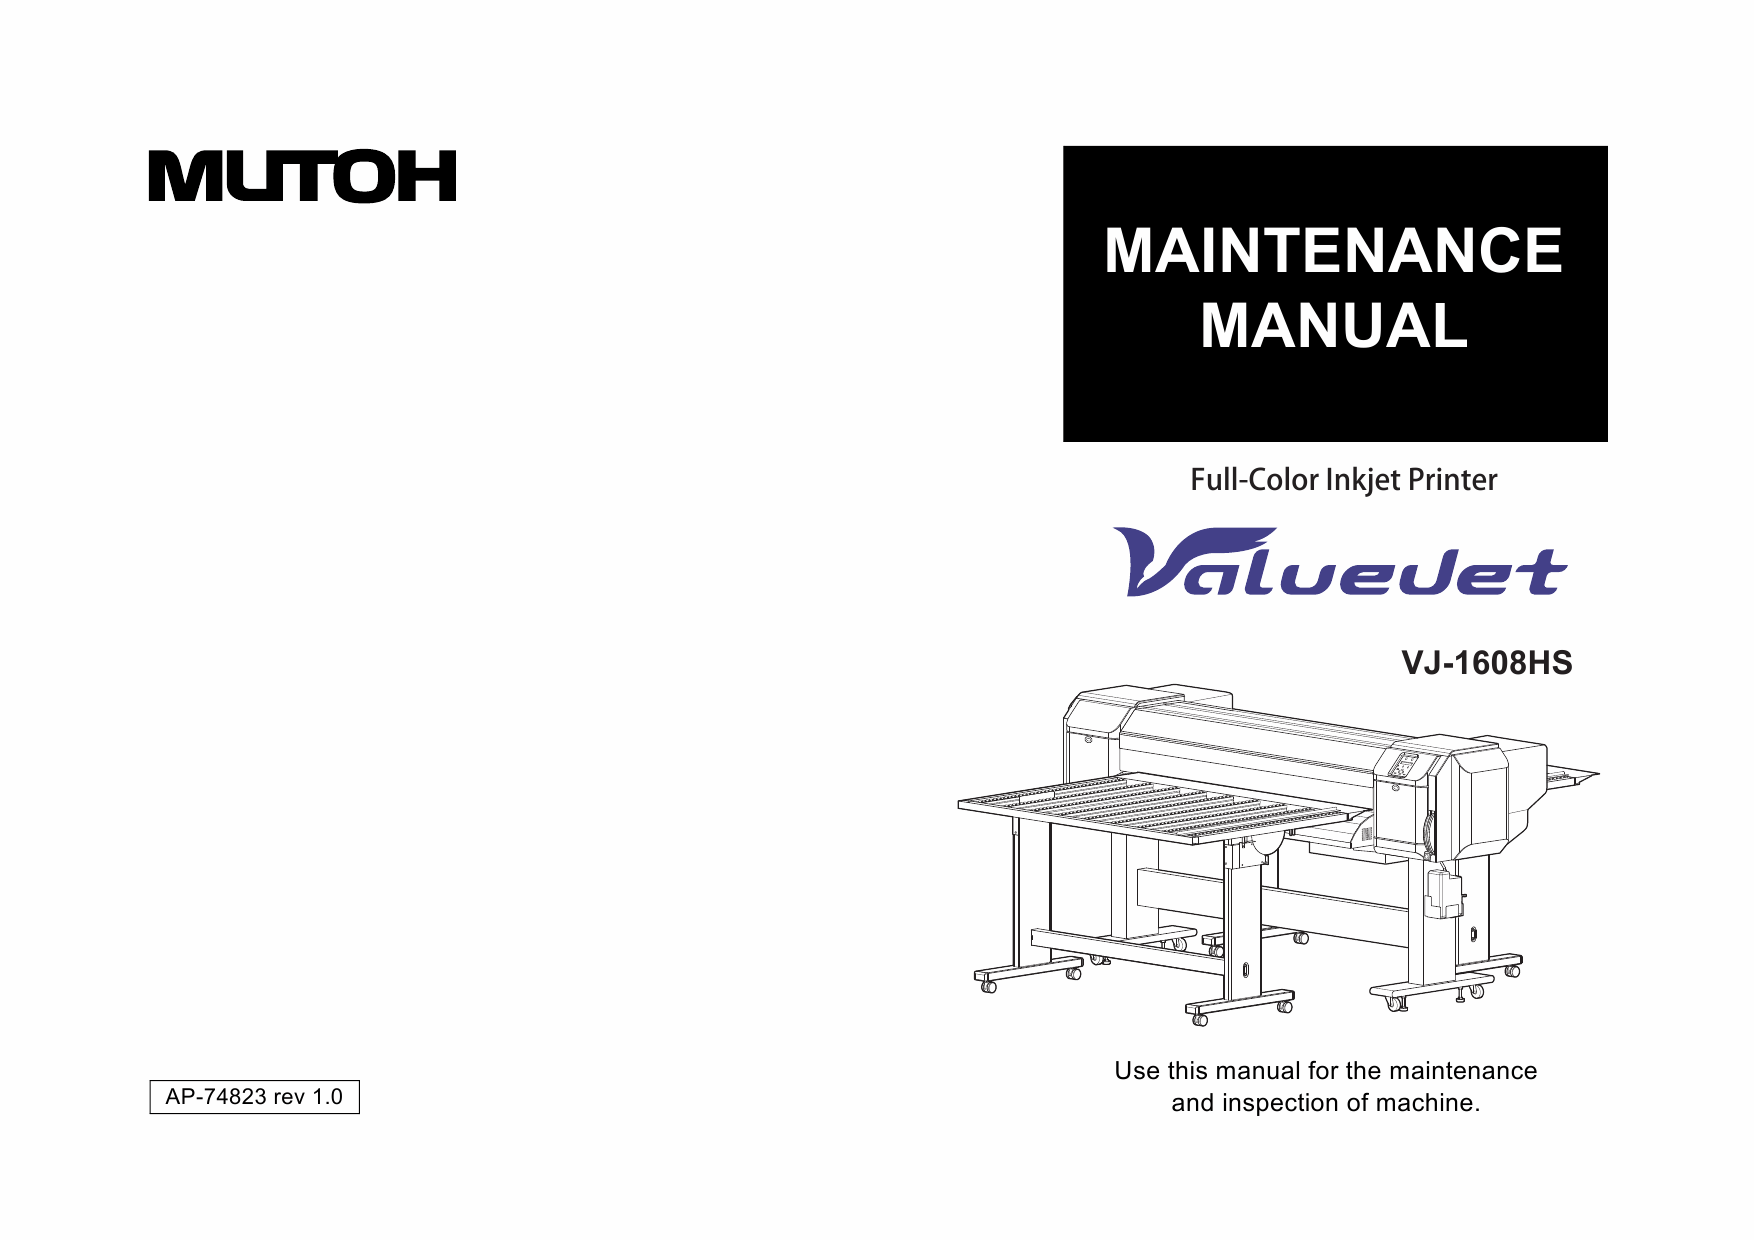 MUTOH ValueJet VJ 1608HS MAINTENANCE Service Manual-1